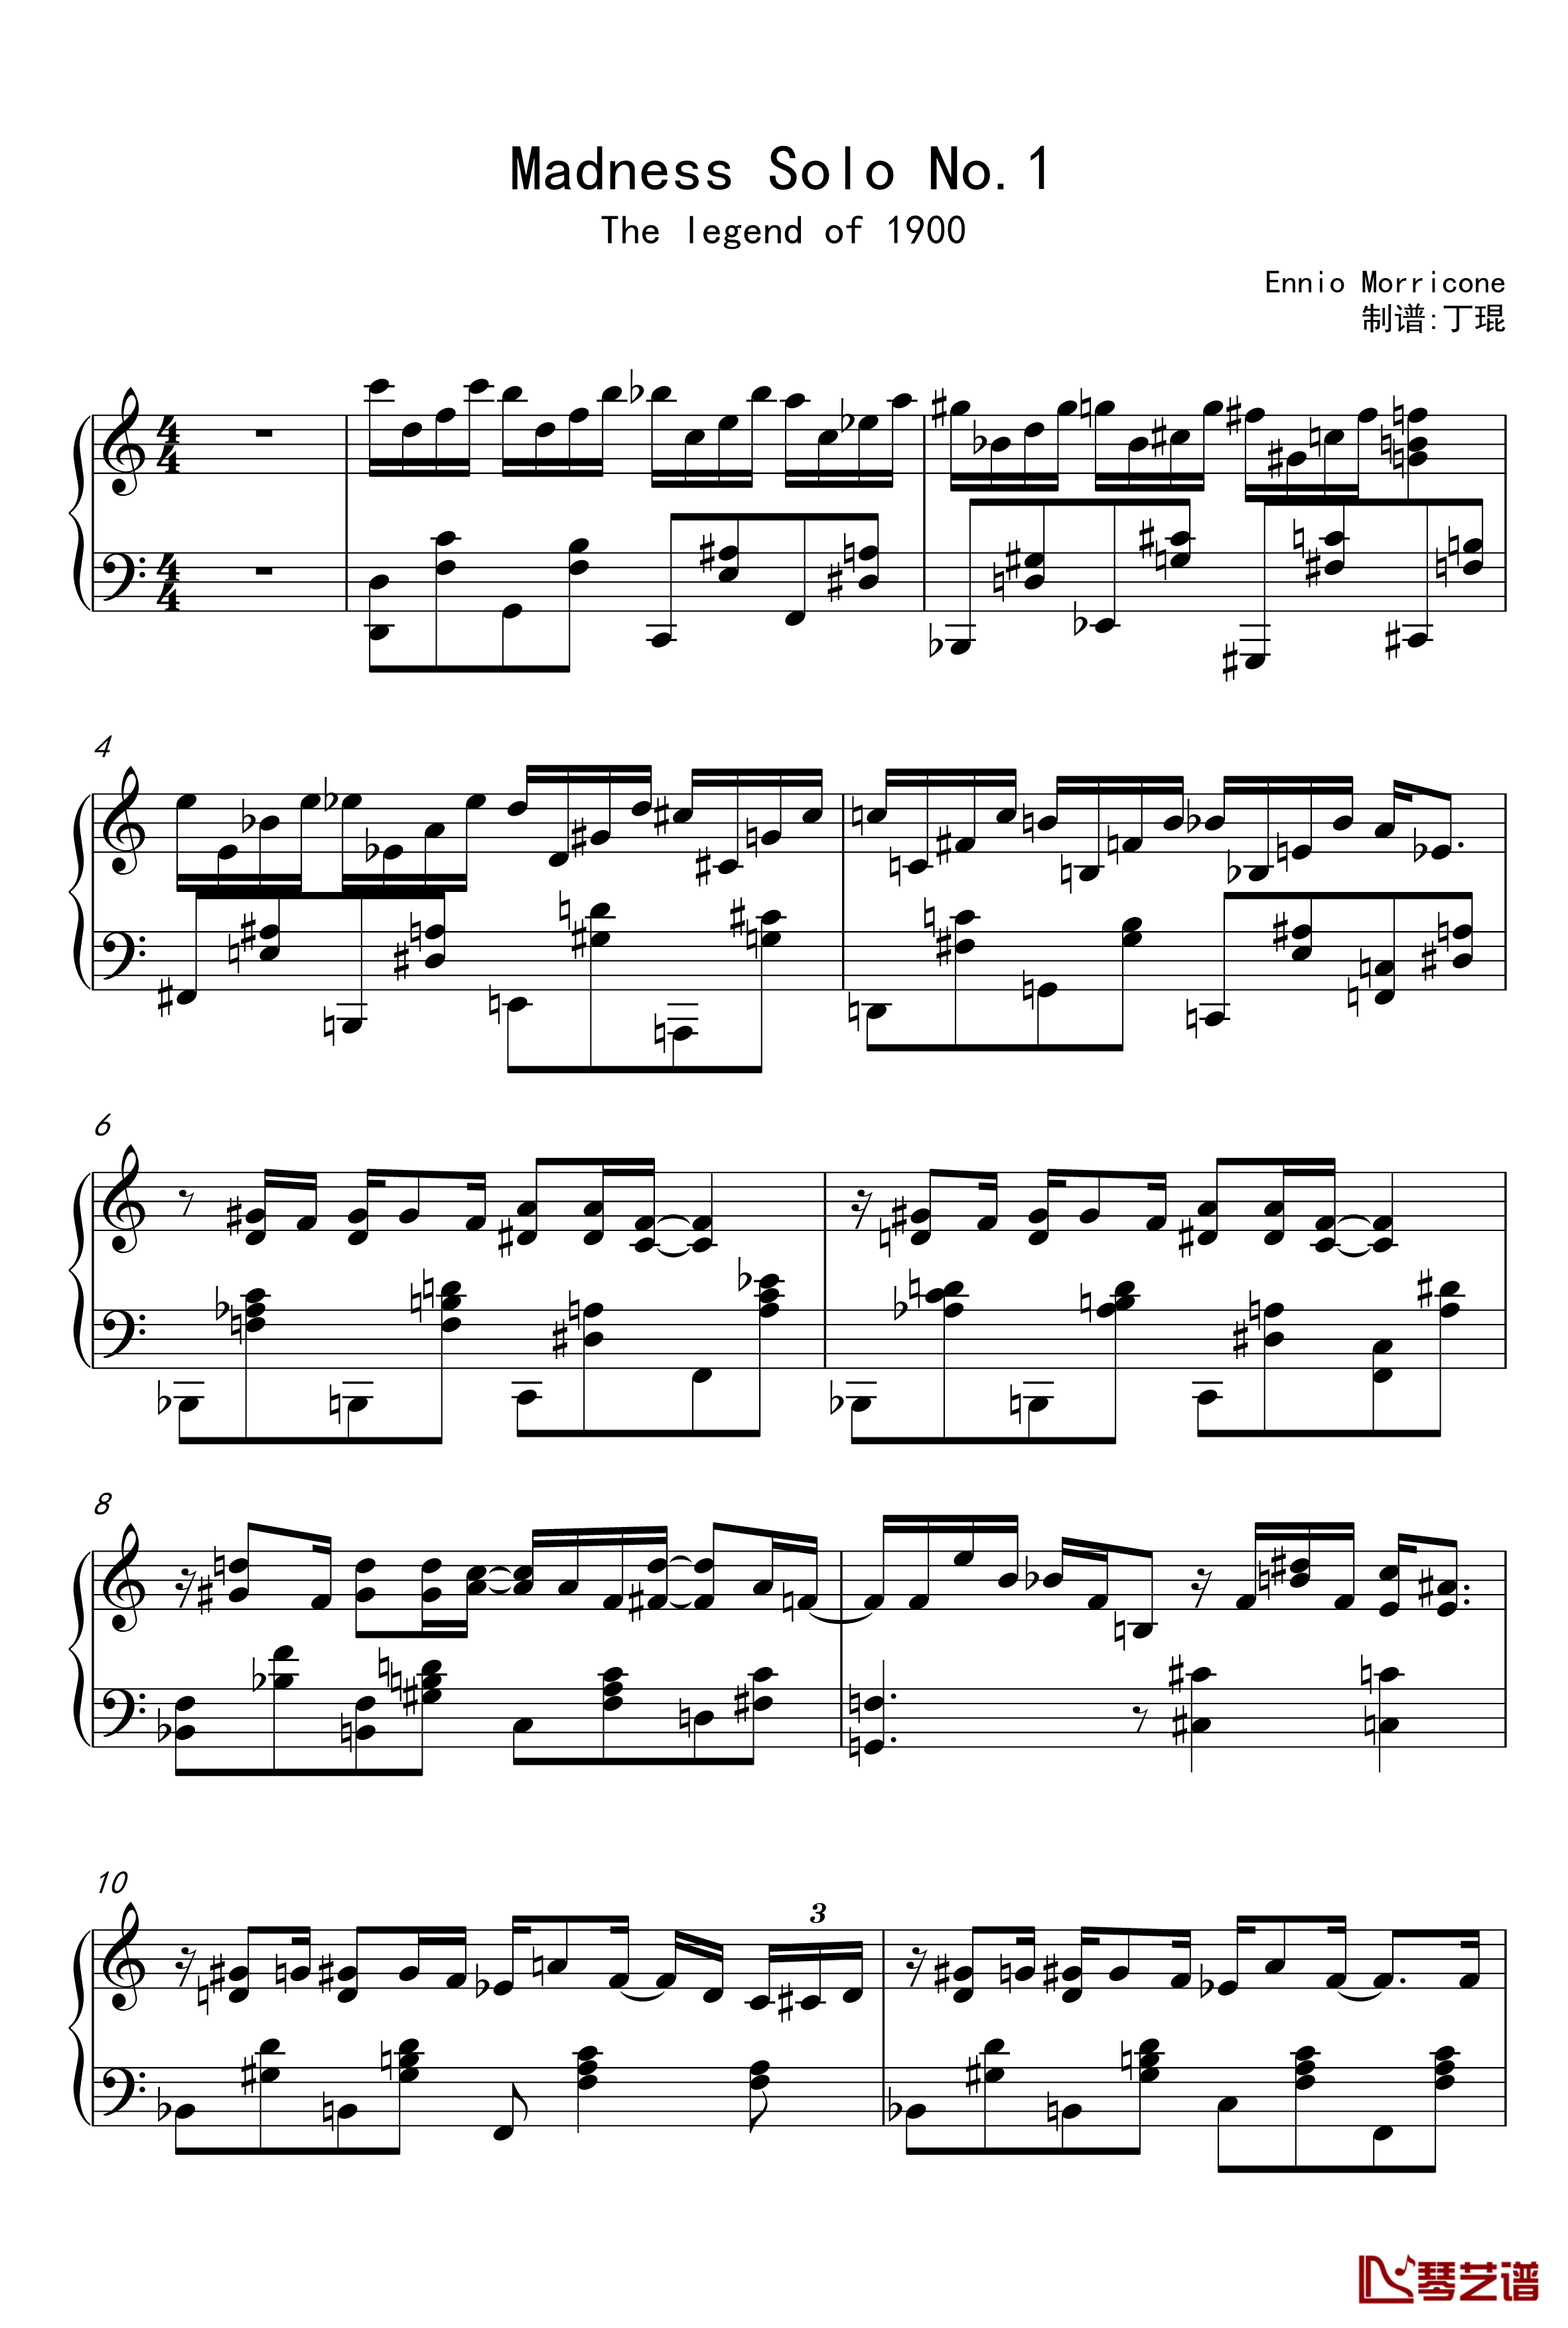 Madness Solo No 1钢琴谱-1900-海上钢琴1